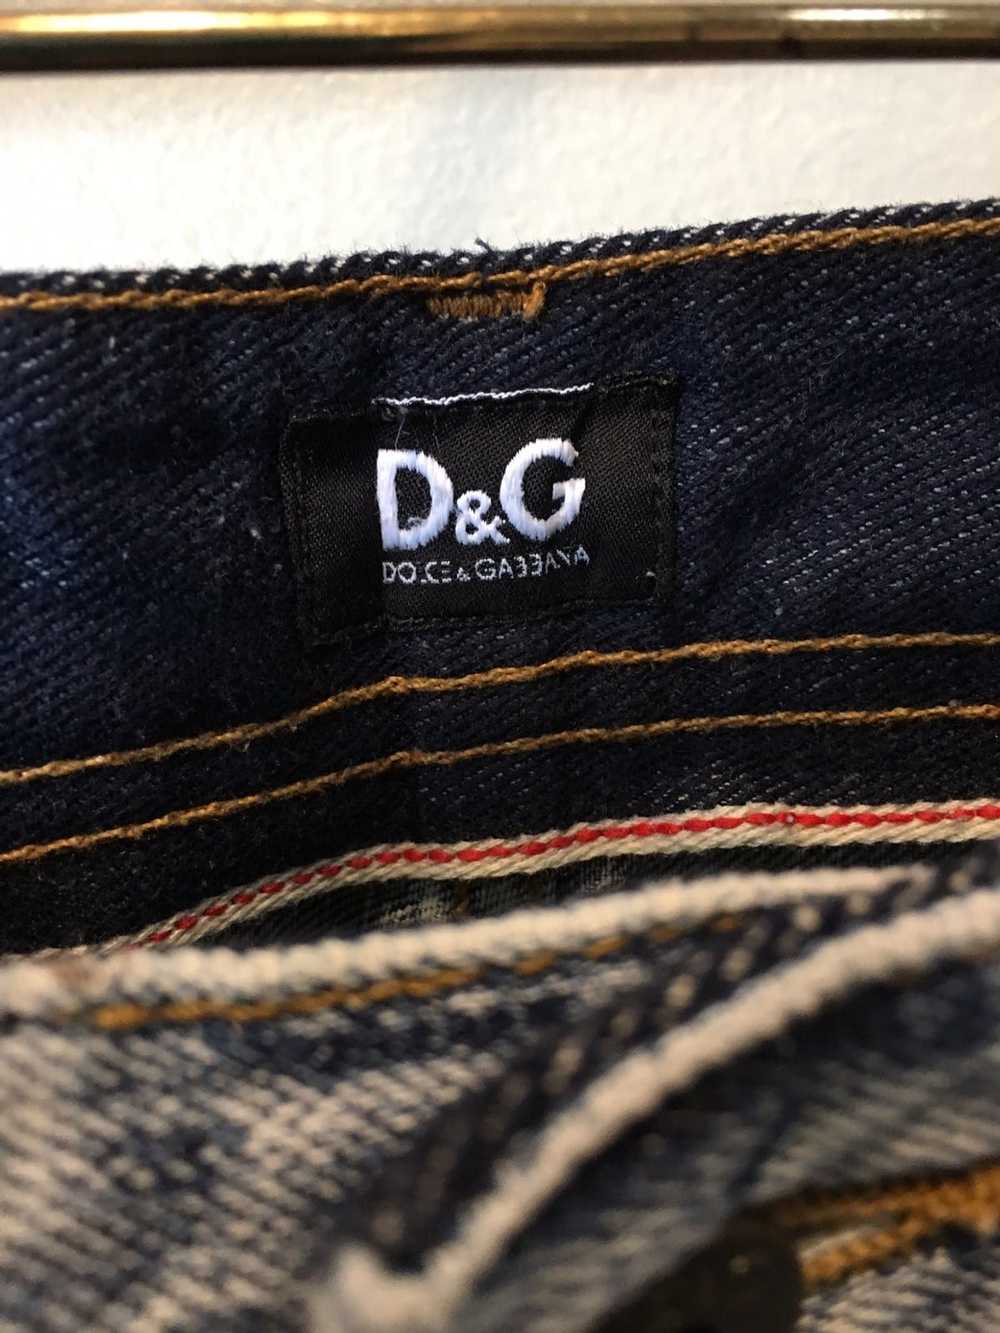 Dolce & Gabbana Dolce & Gabbana distressed Jeans - image 5